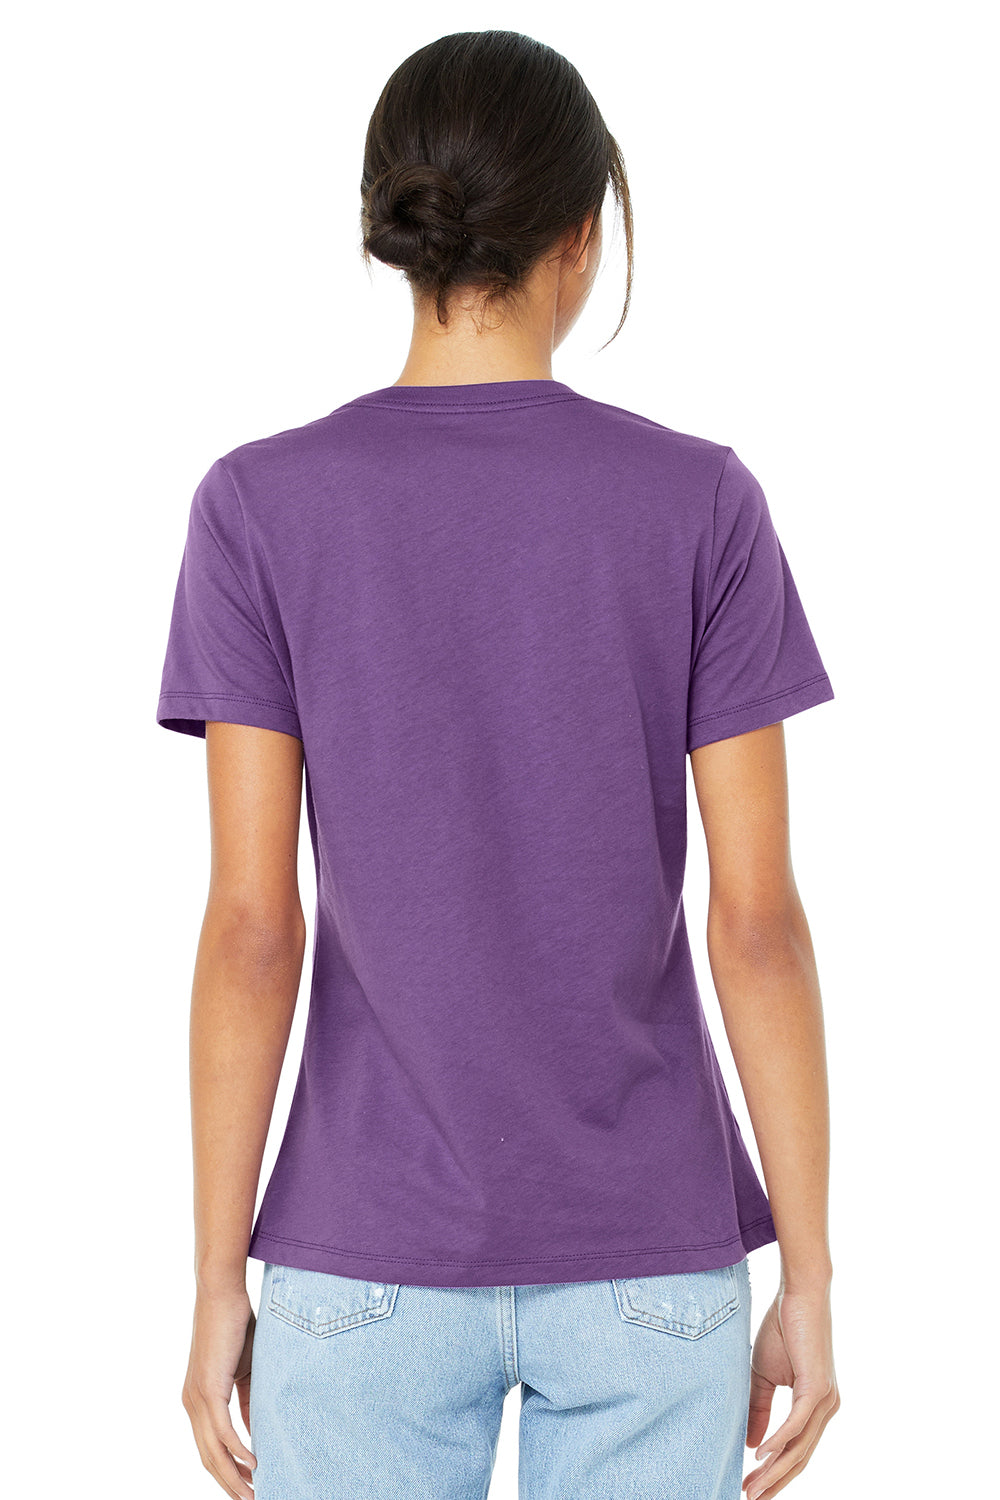 Bella + Canvas BC6400/B6400/6400 Womens Relaxed Jersey Short Sleeve Crewneck T-Shirt Royal Purple Model Back